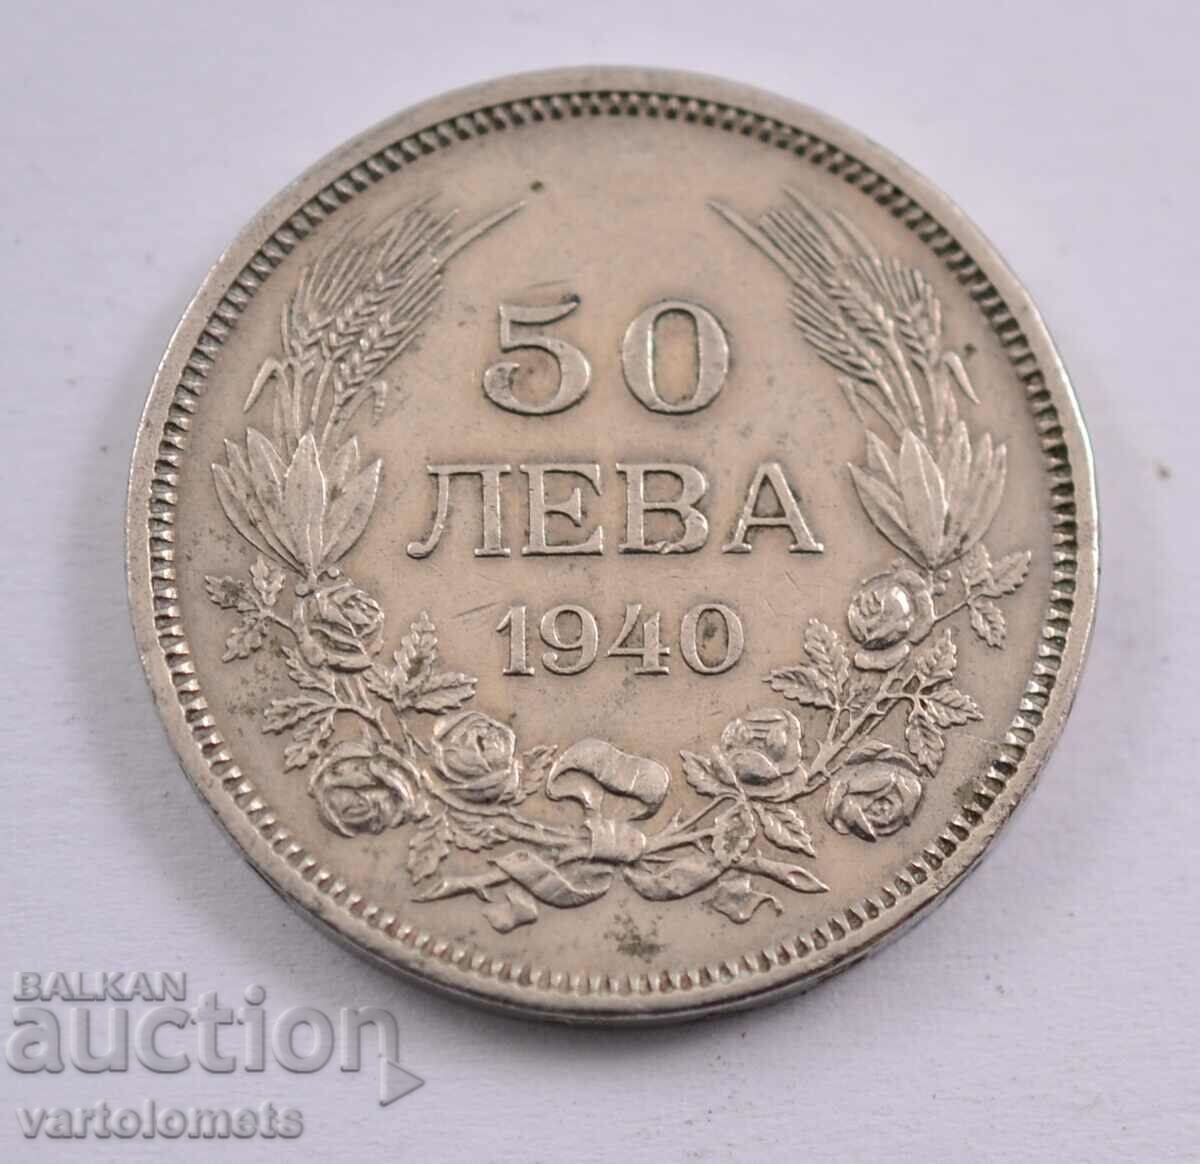 50 leva 1940 - Bulgaria